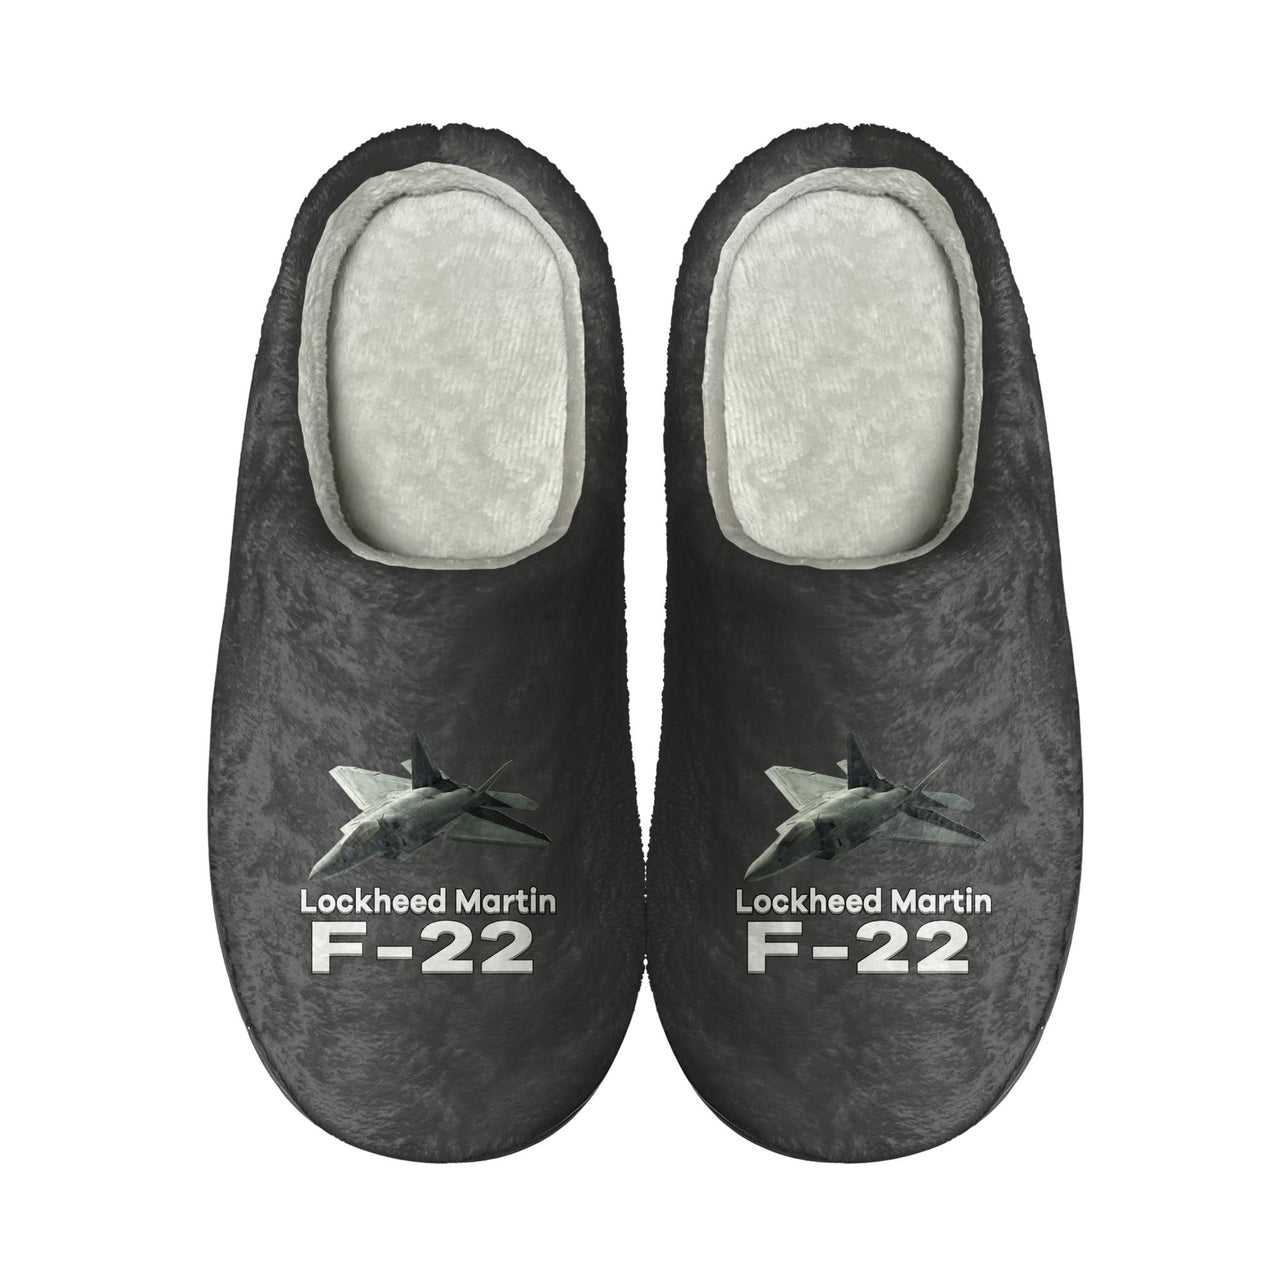 The Lockheed Martin F22 Designed Cotton Slippers